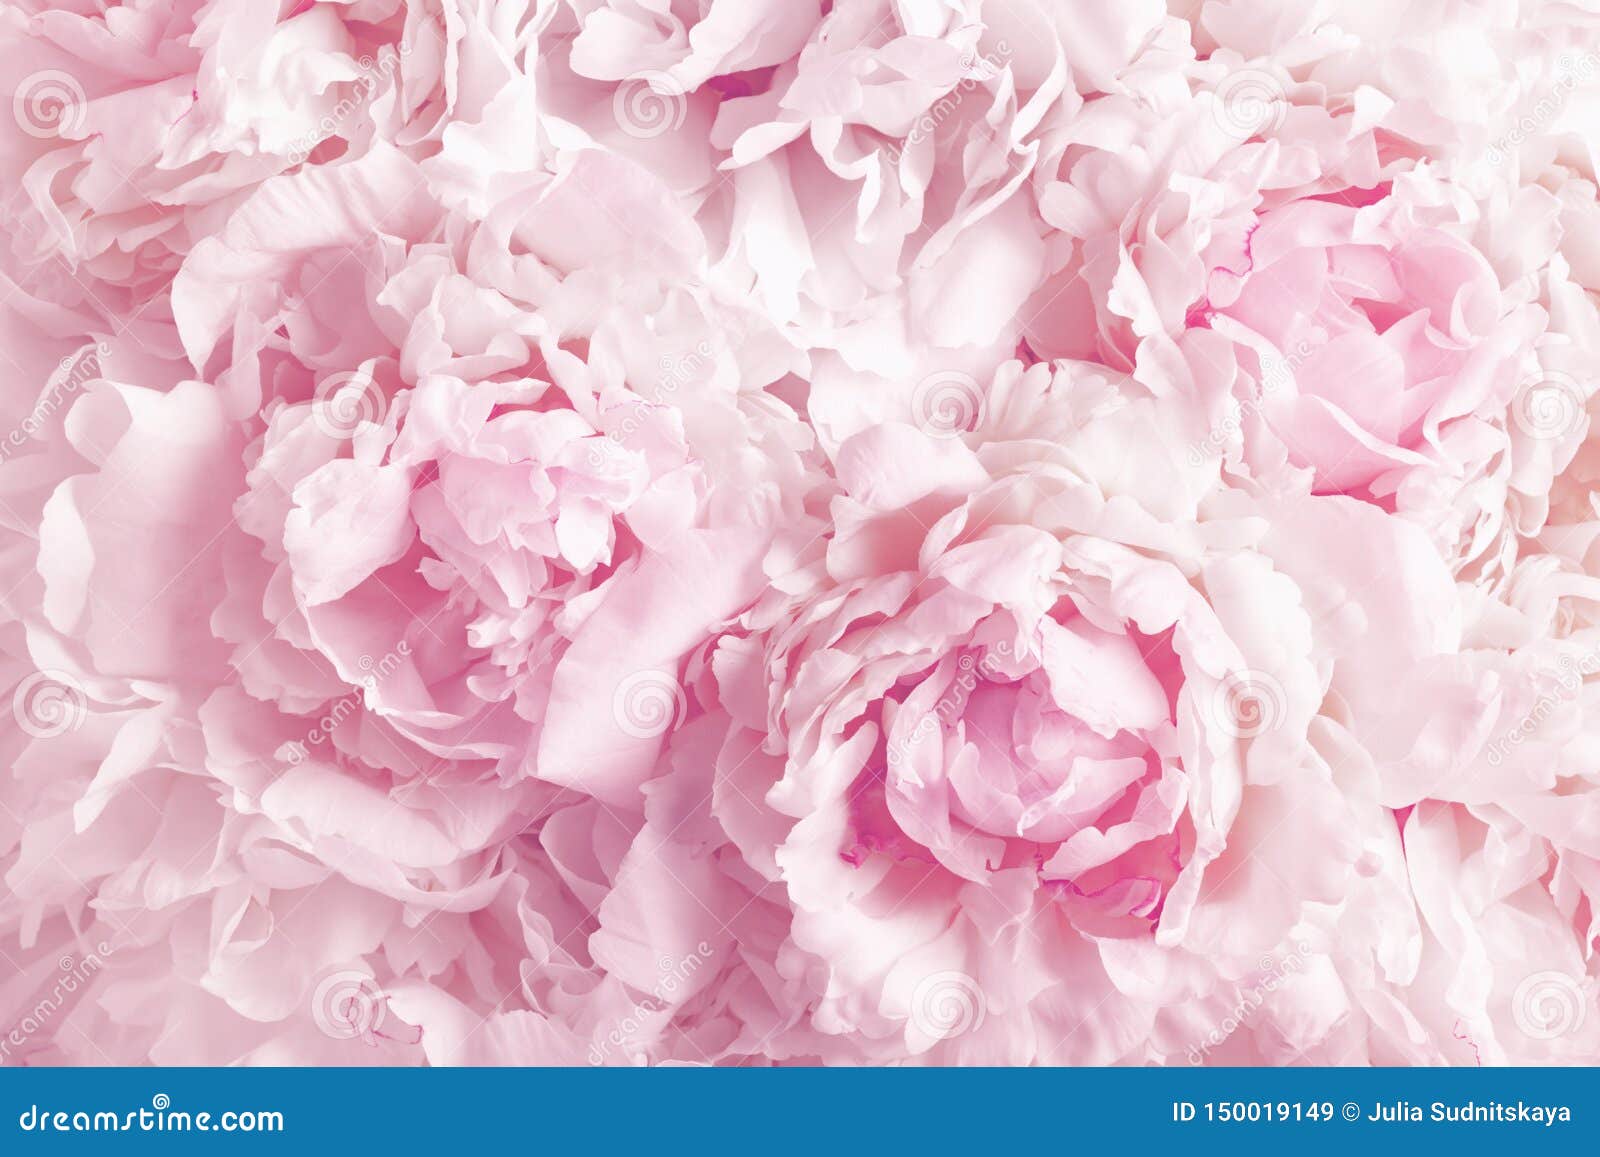 beautiful floral background from pink peonies. tender flowers petals in vintage toned